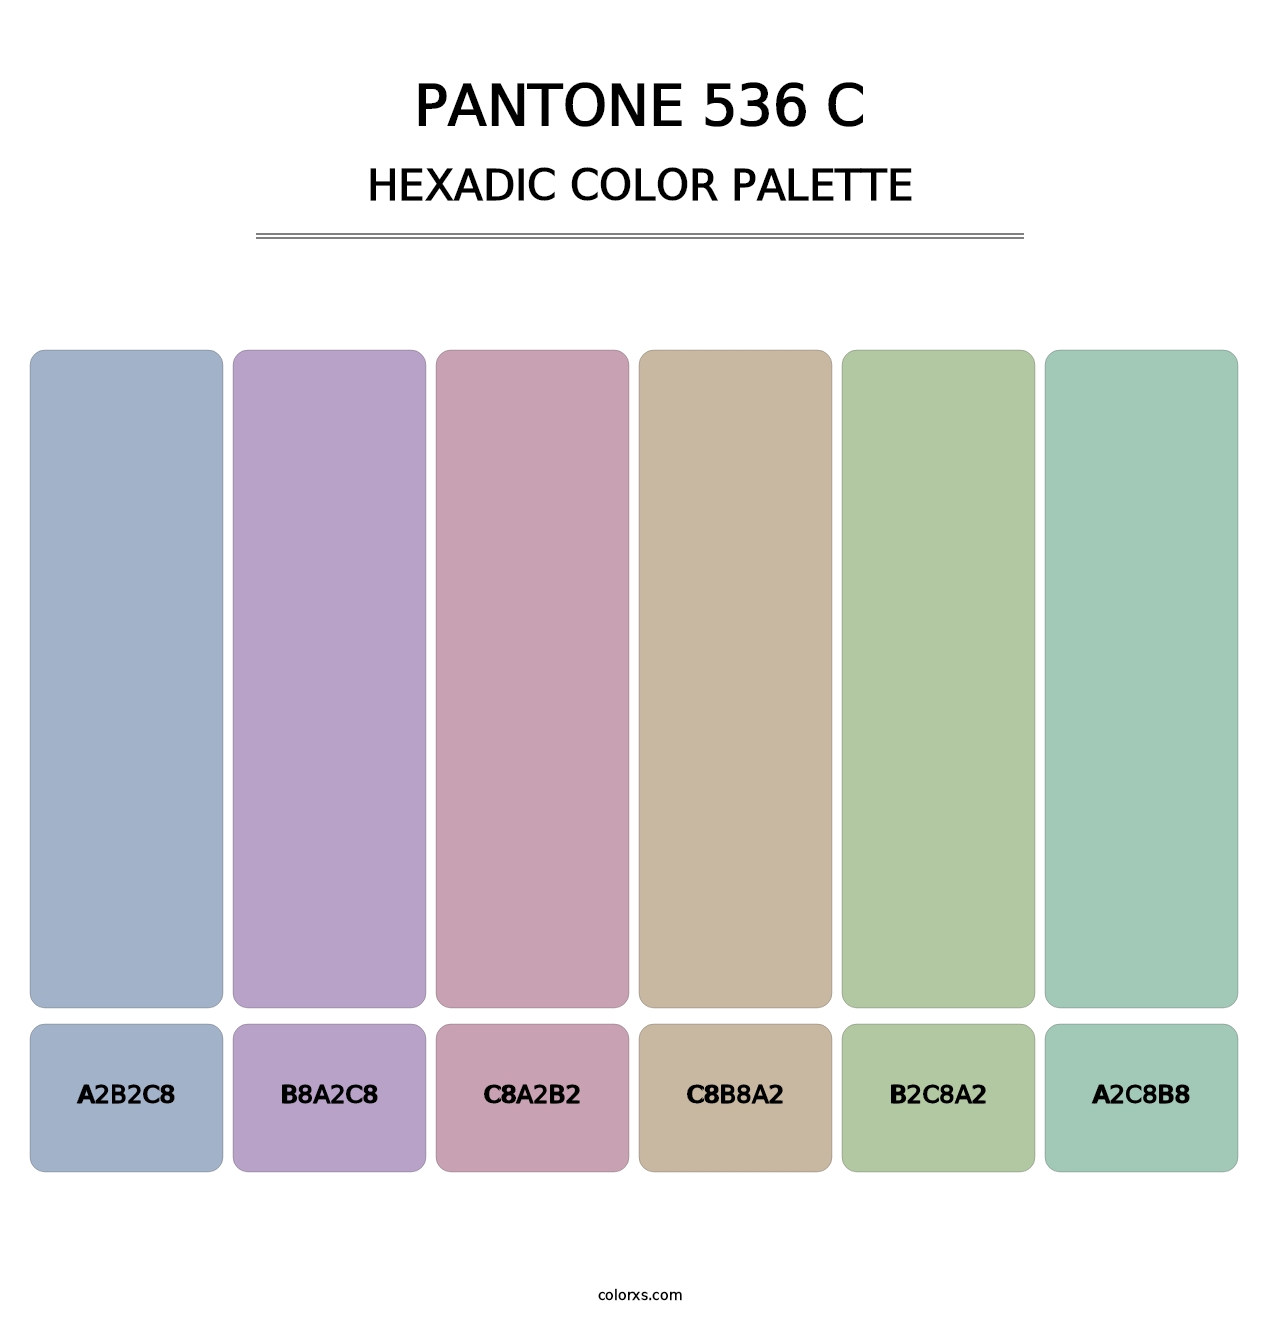 PANTONE 536 C - Hexadic Color Palette